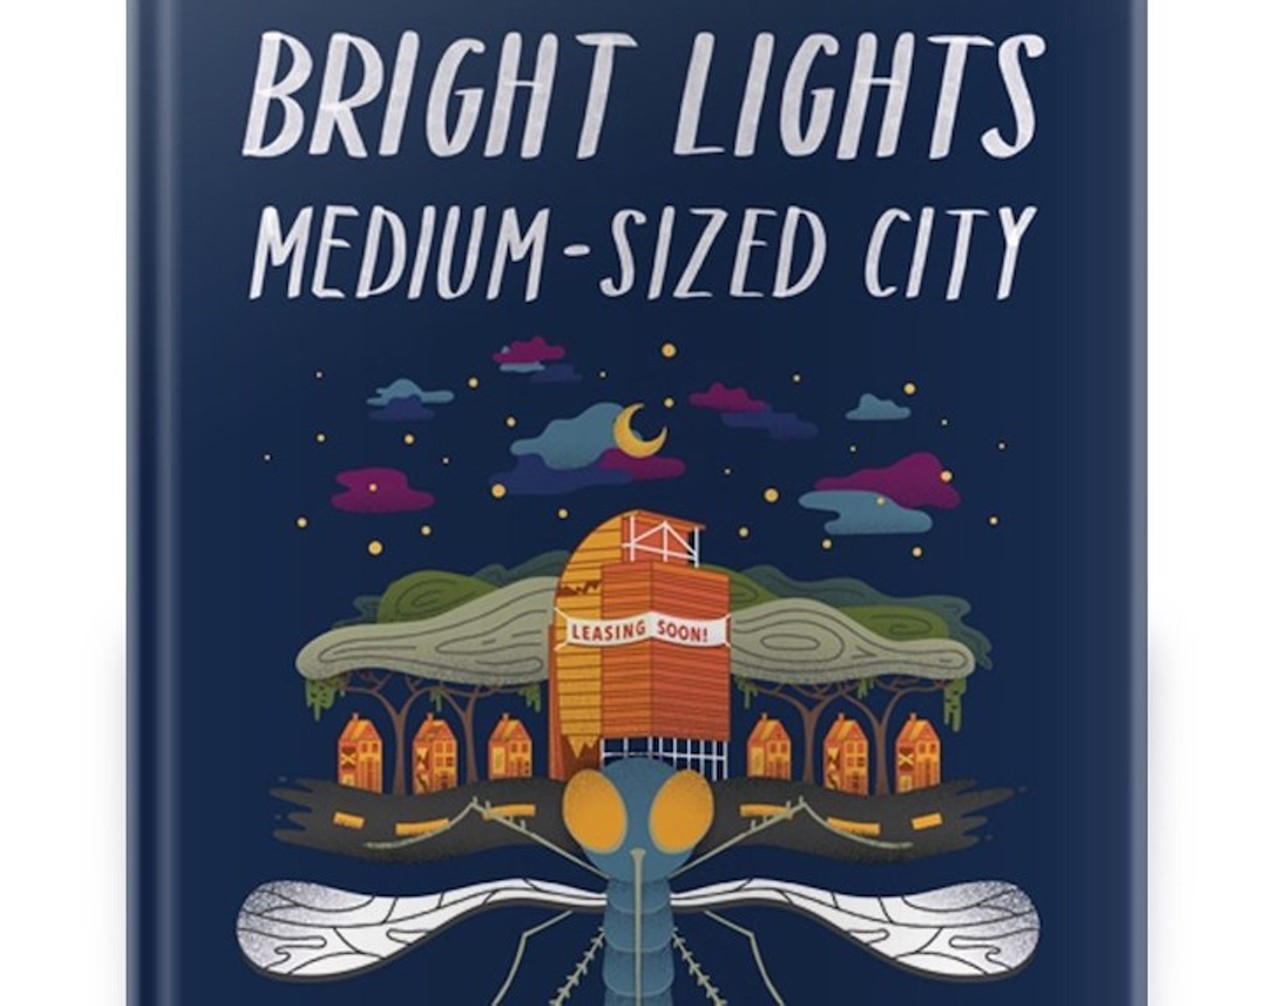 Saturday, Nov. 9Bright Lights, Medium-sized City Release Party at the Orange StudioImage courtesy Burrow Press